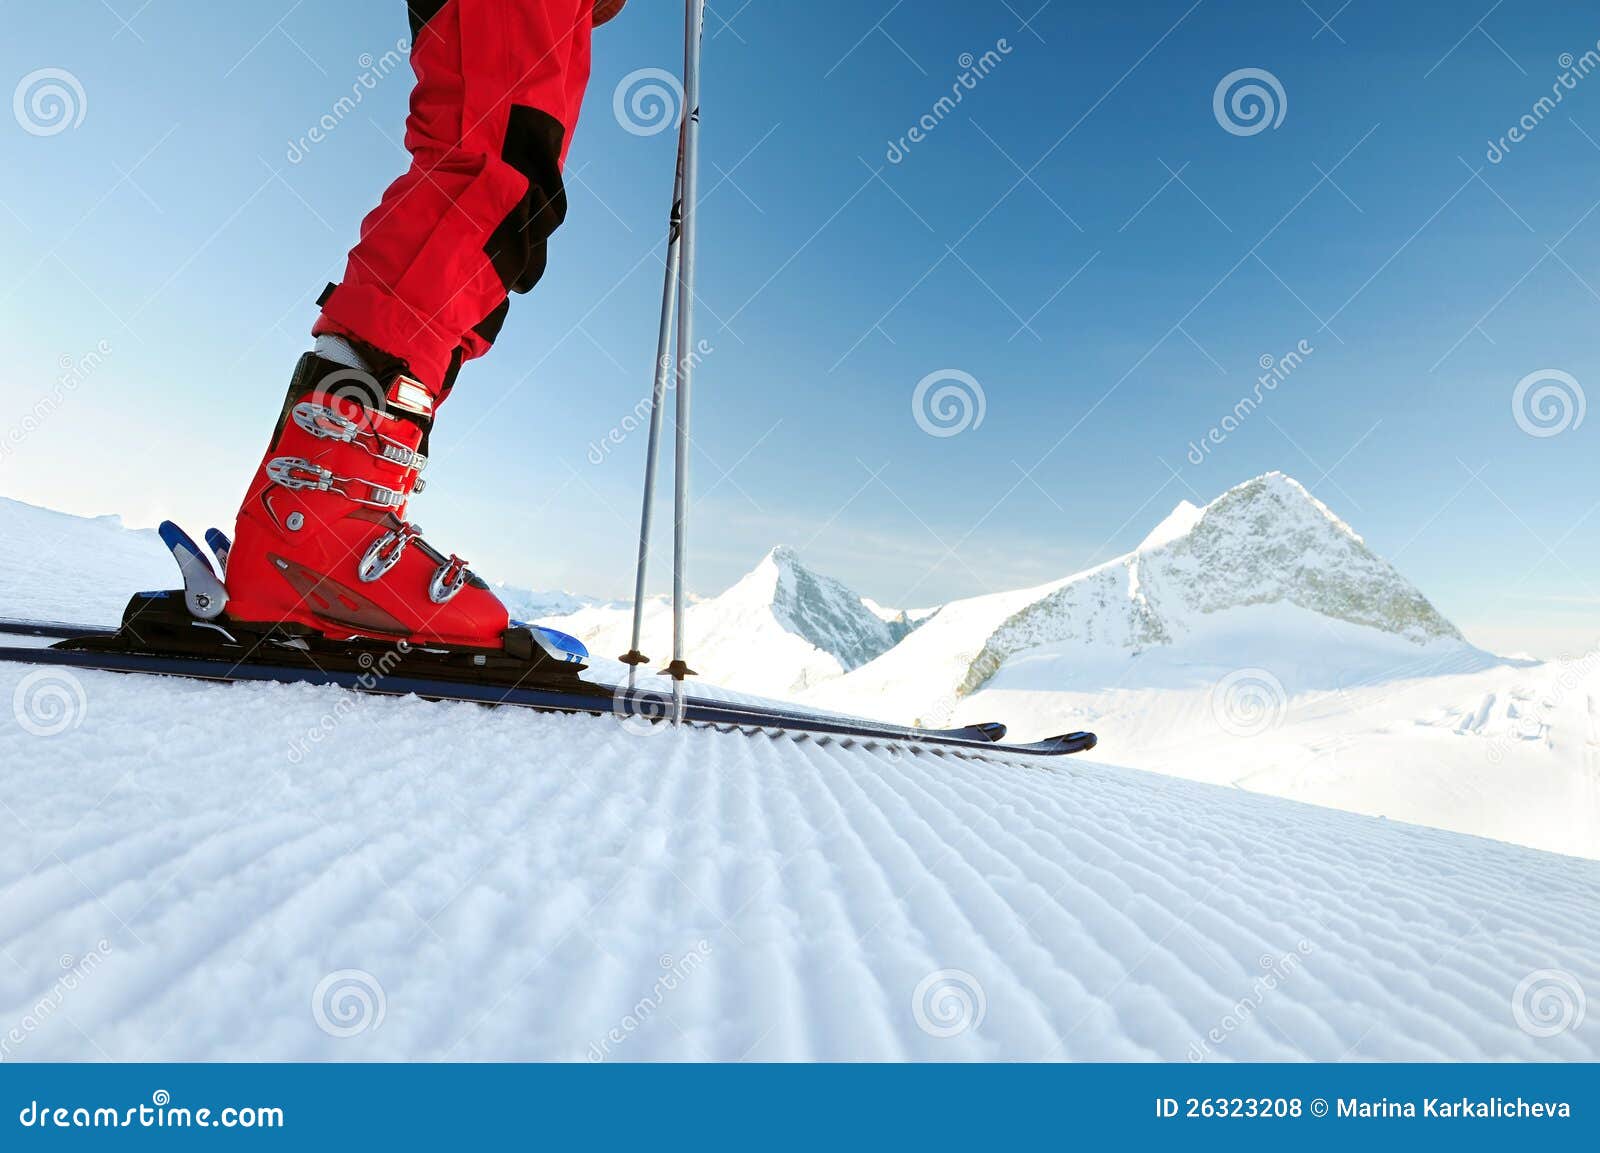 skier on an untouched ski track